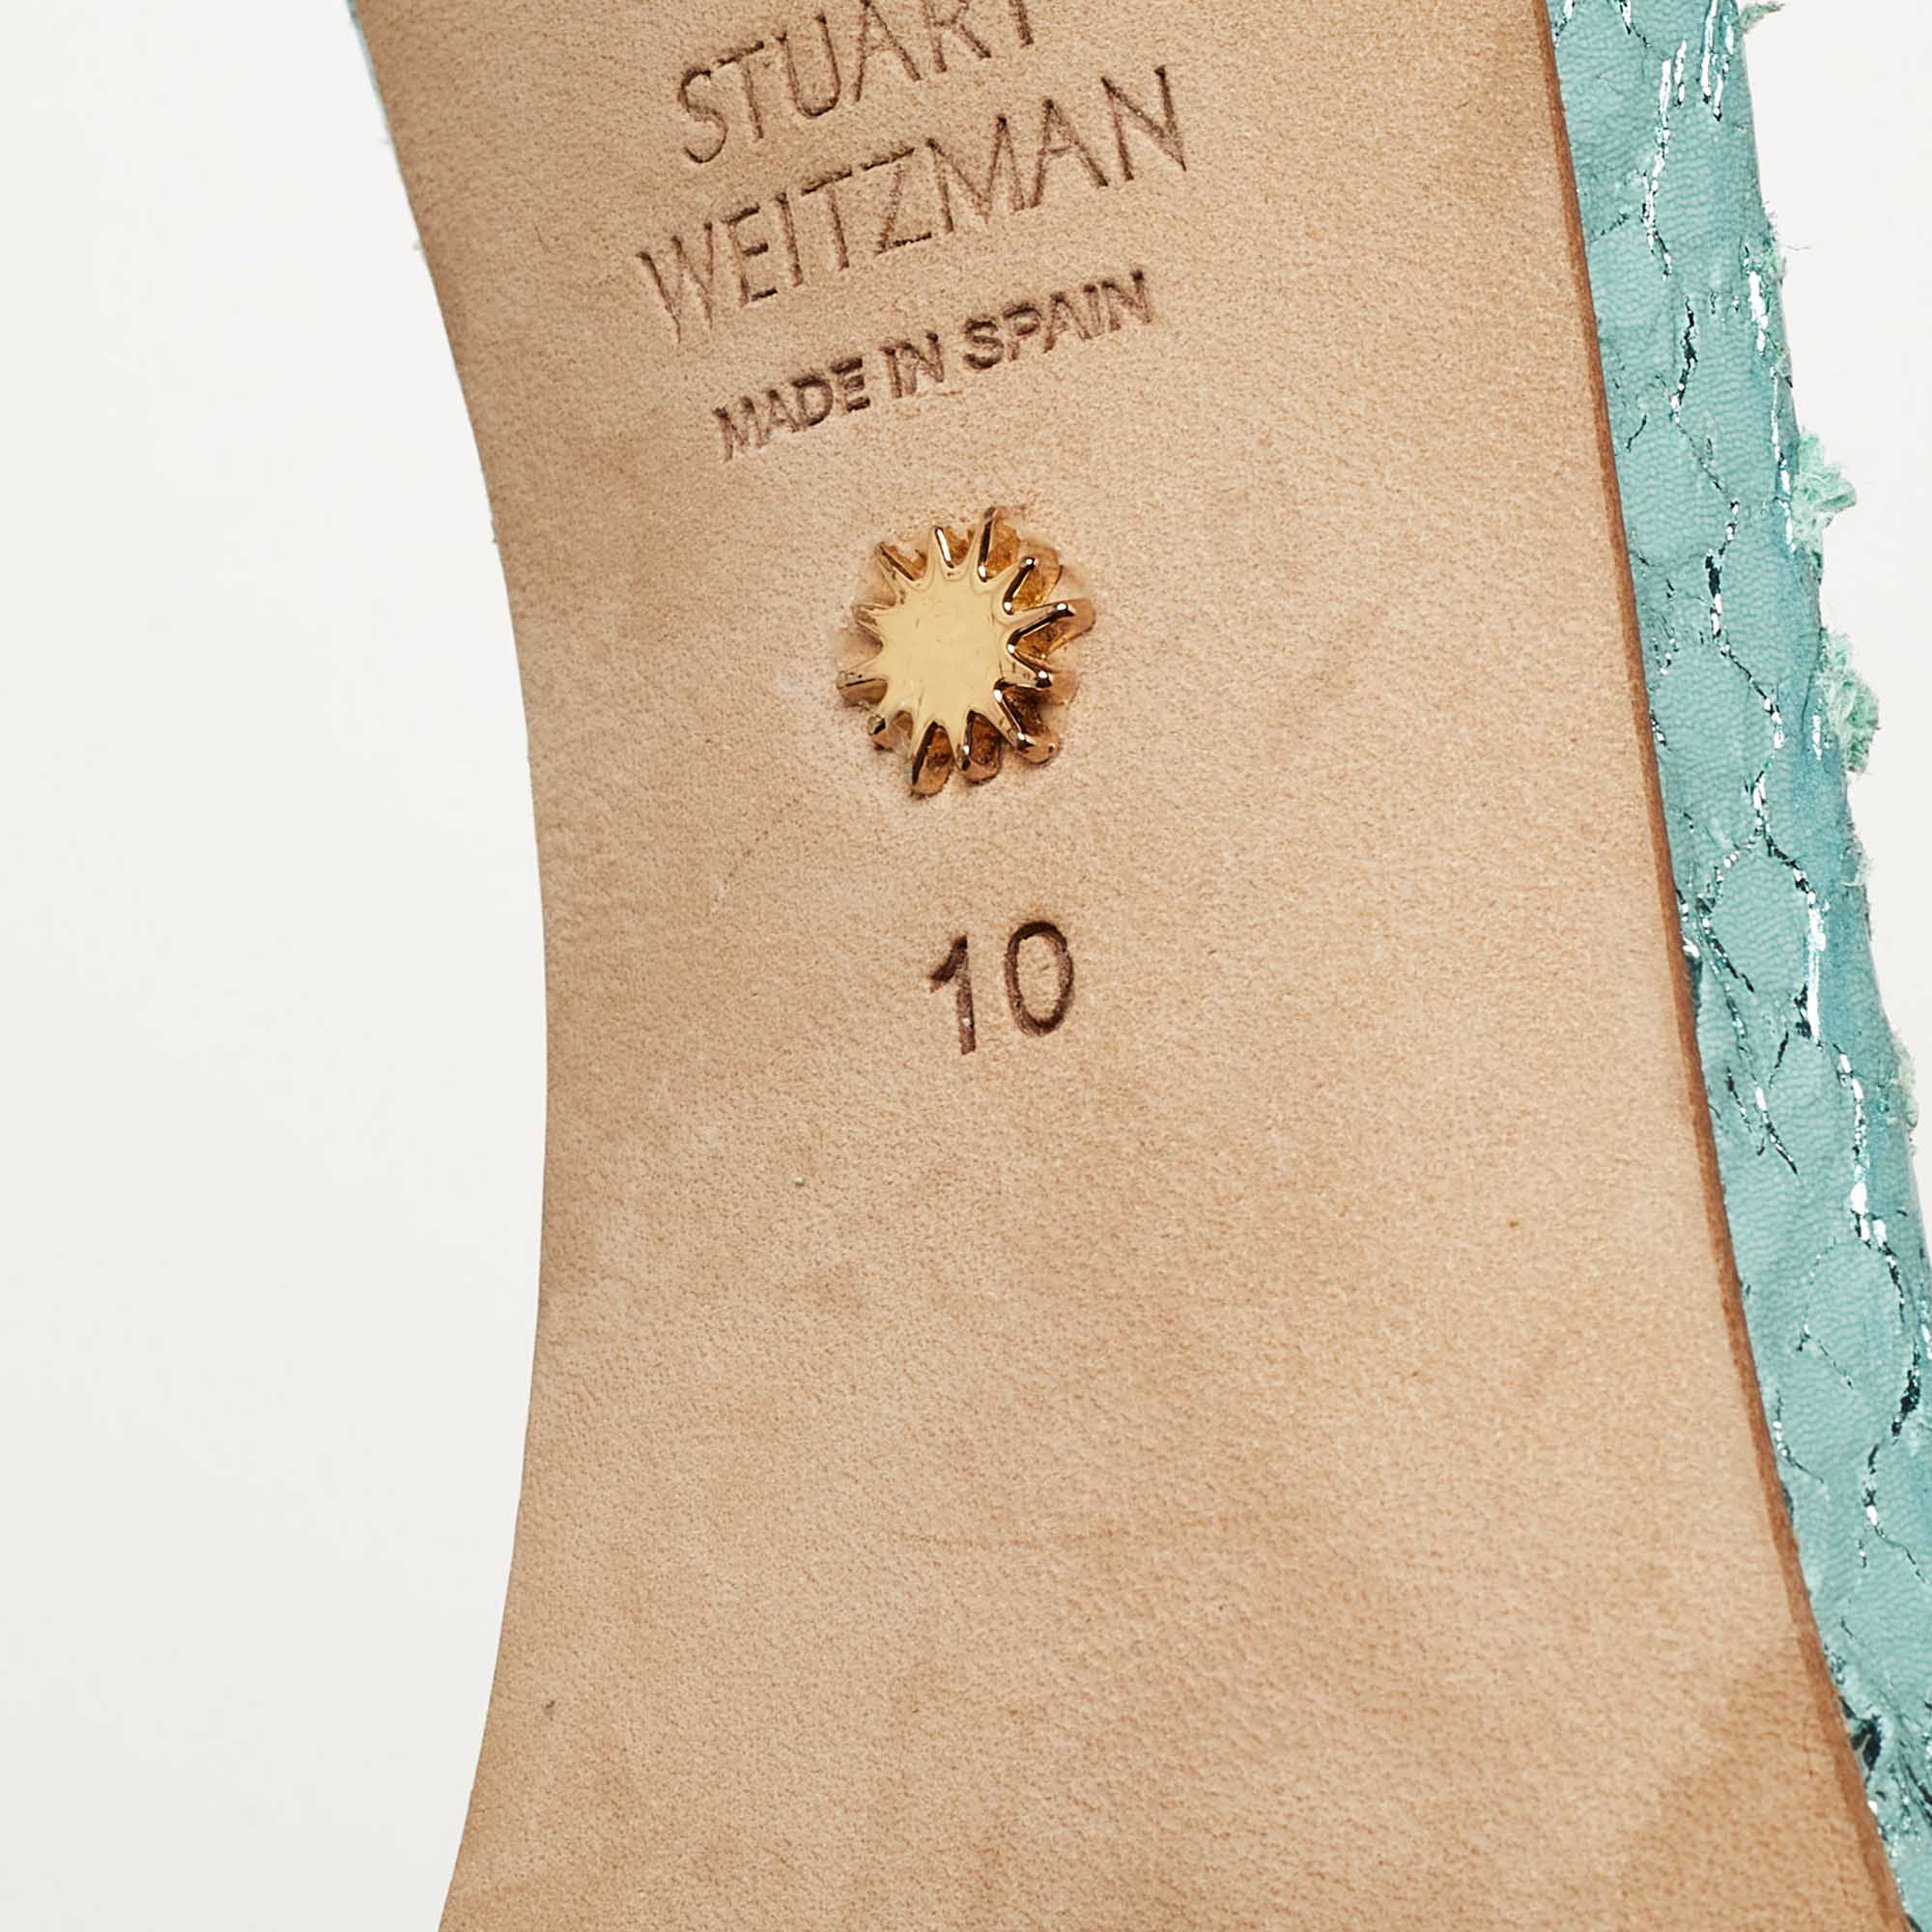 Stuart Weitzman Metallic Blue Python Embossed Leather Nudist Ankle Strap Sandals Size 41